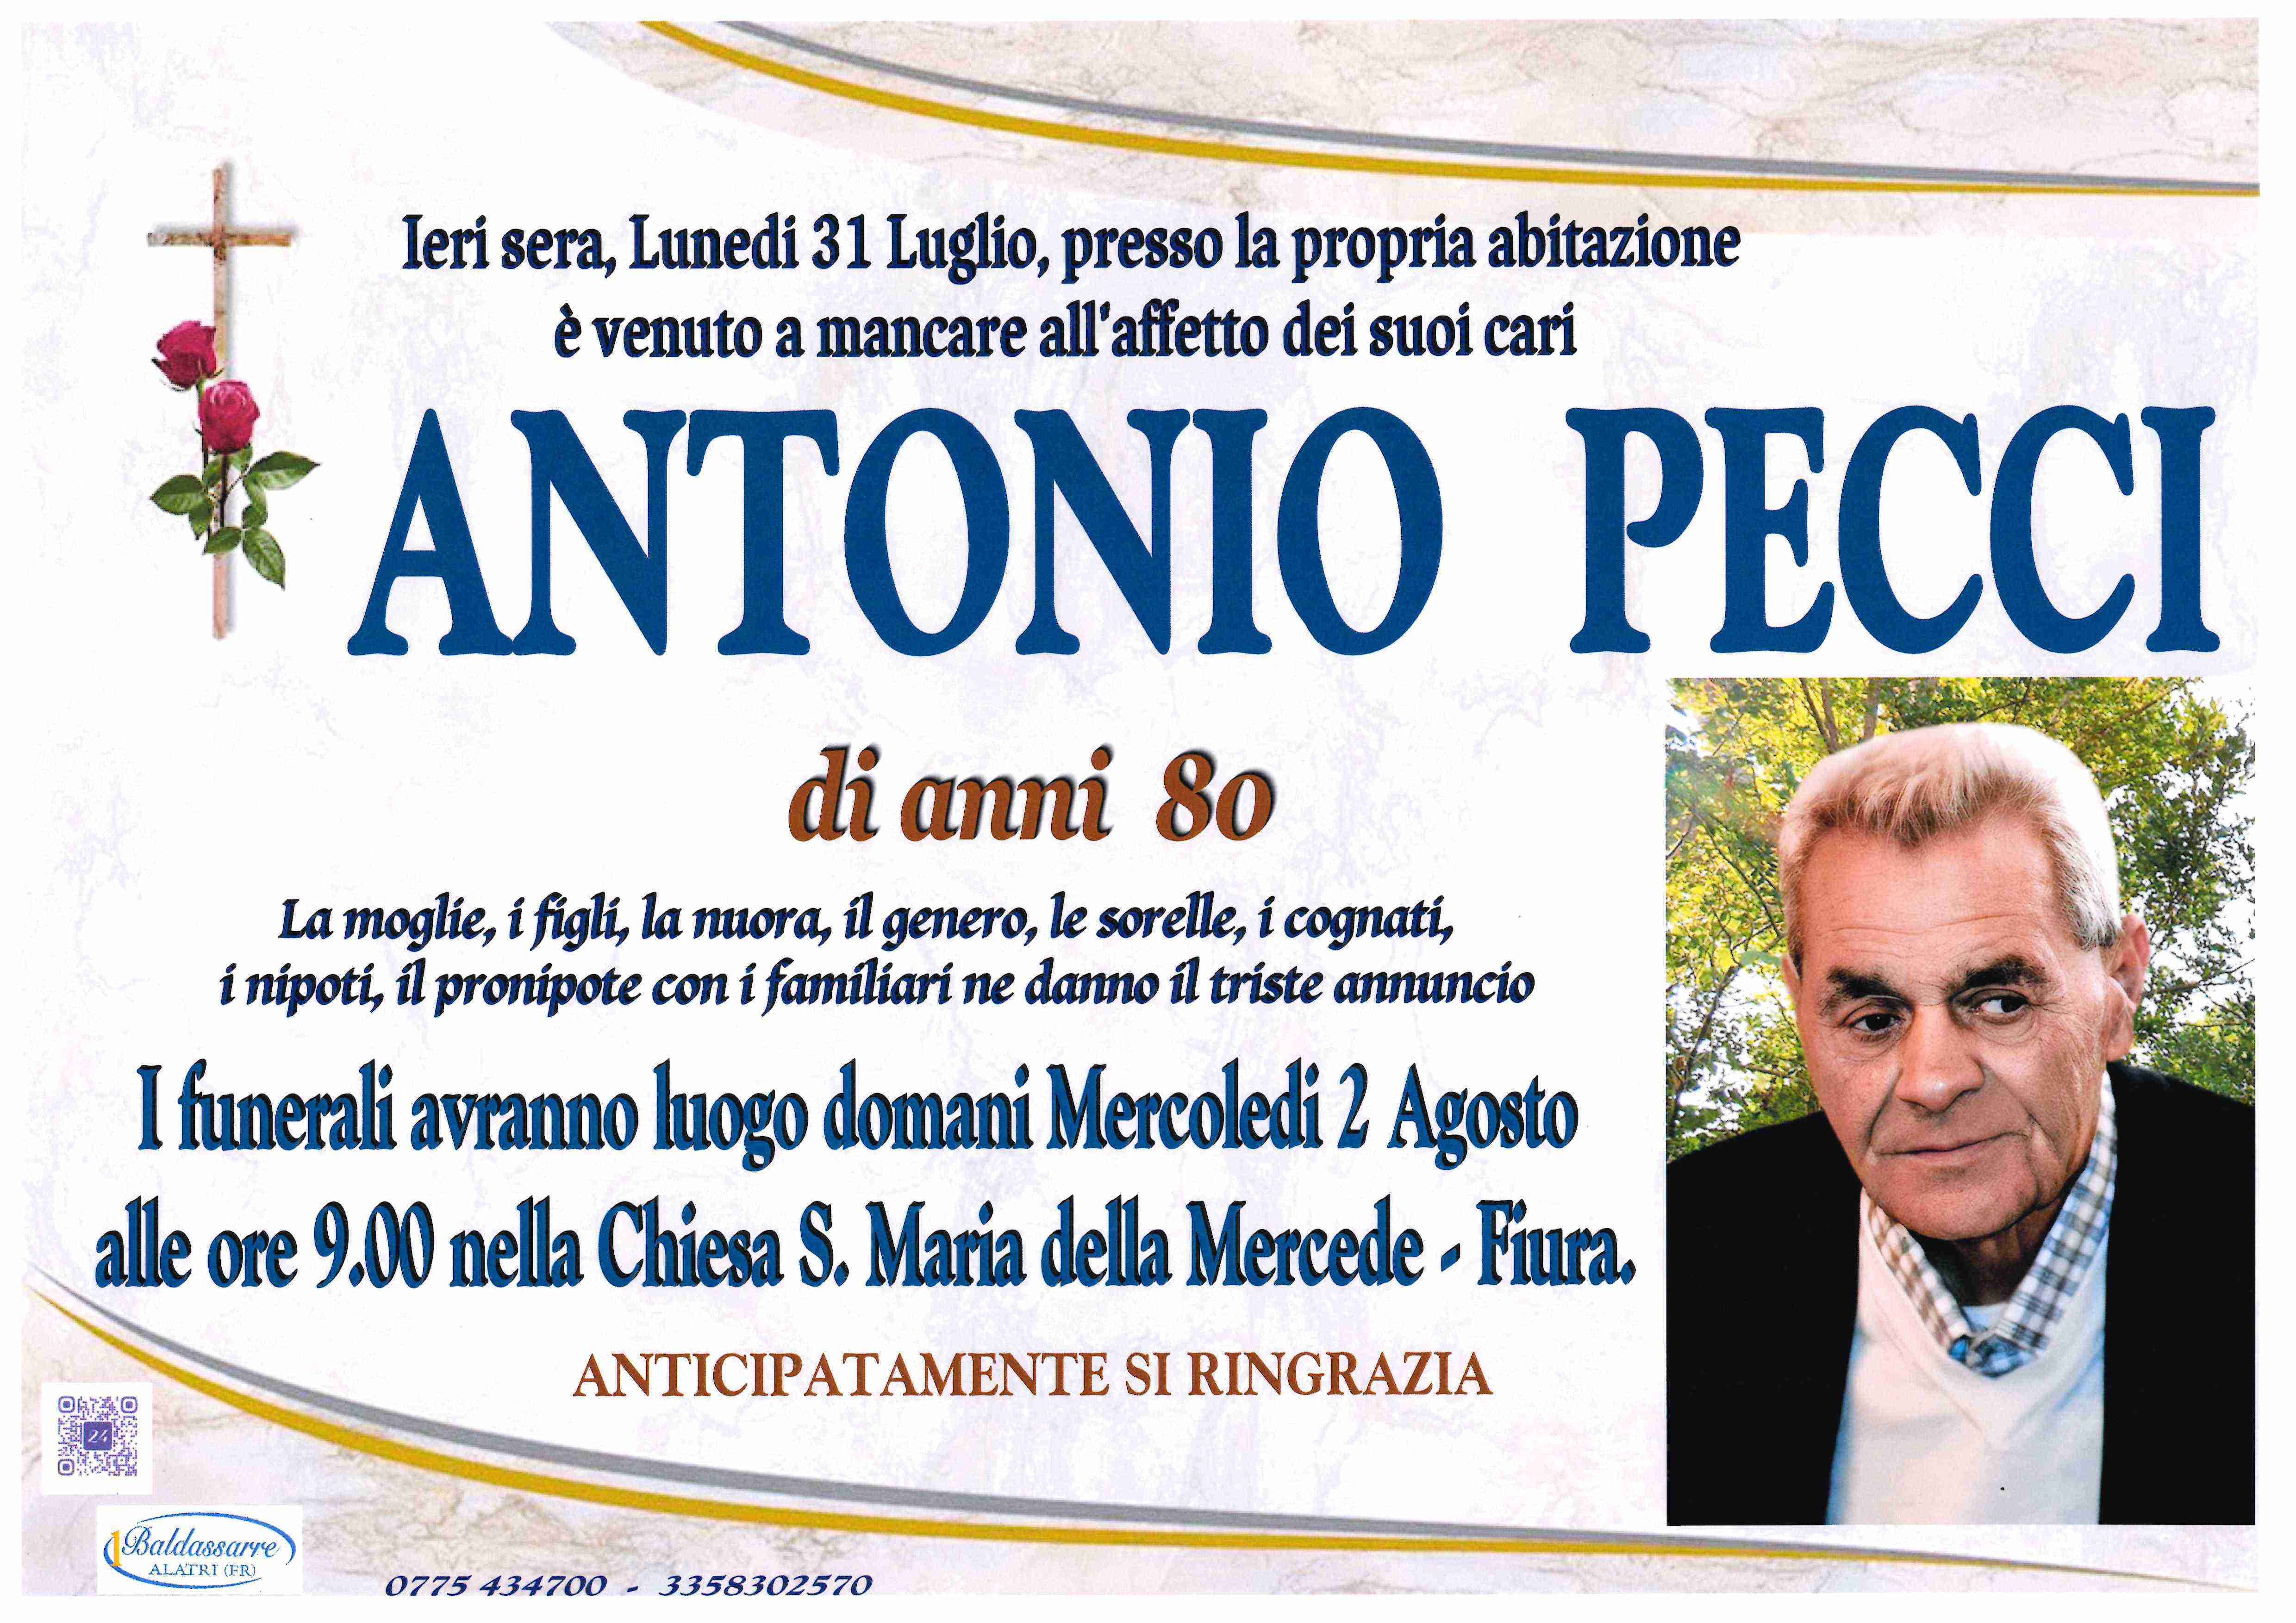 Antonio Pecci